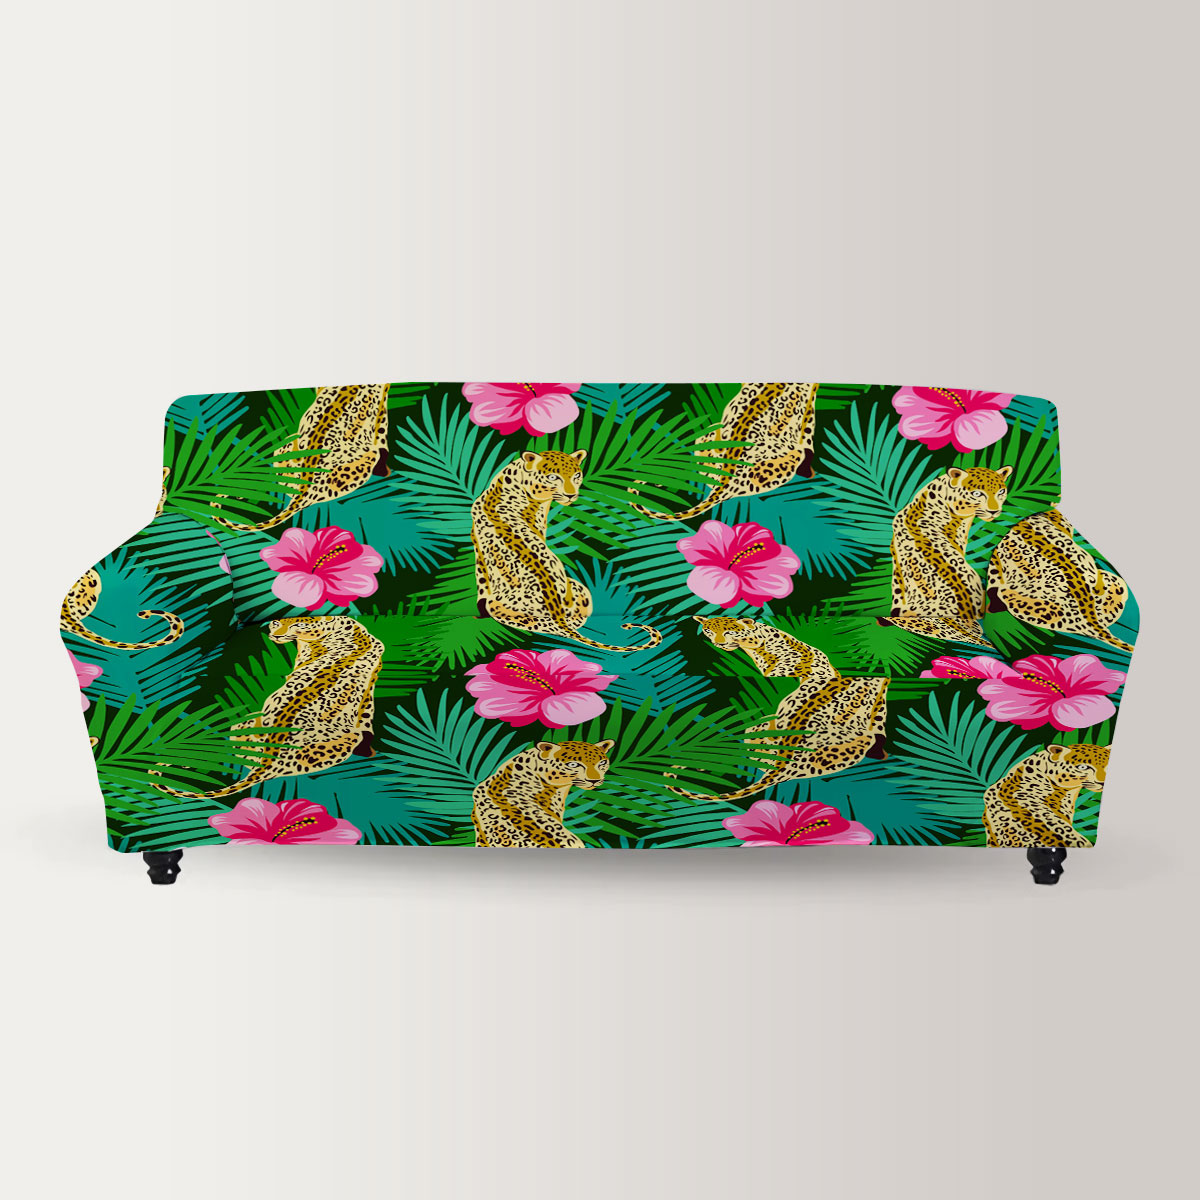 Floral Leopard Sofa Cover